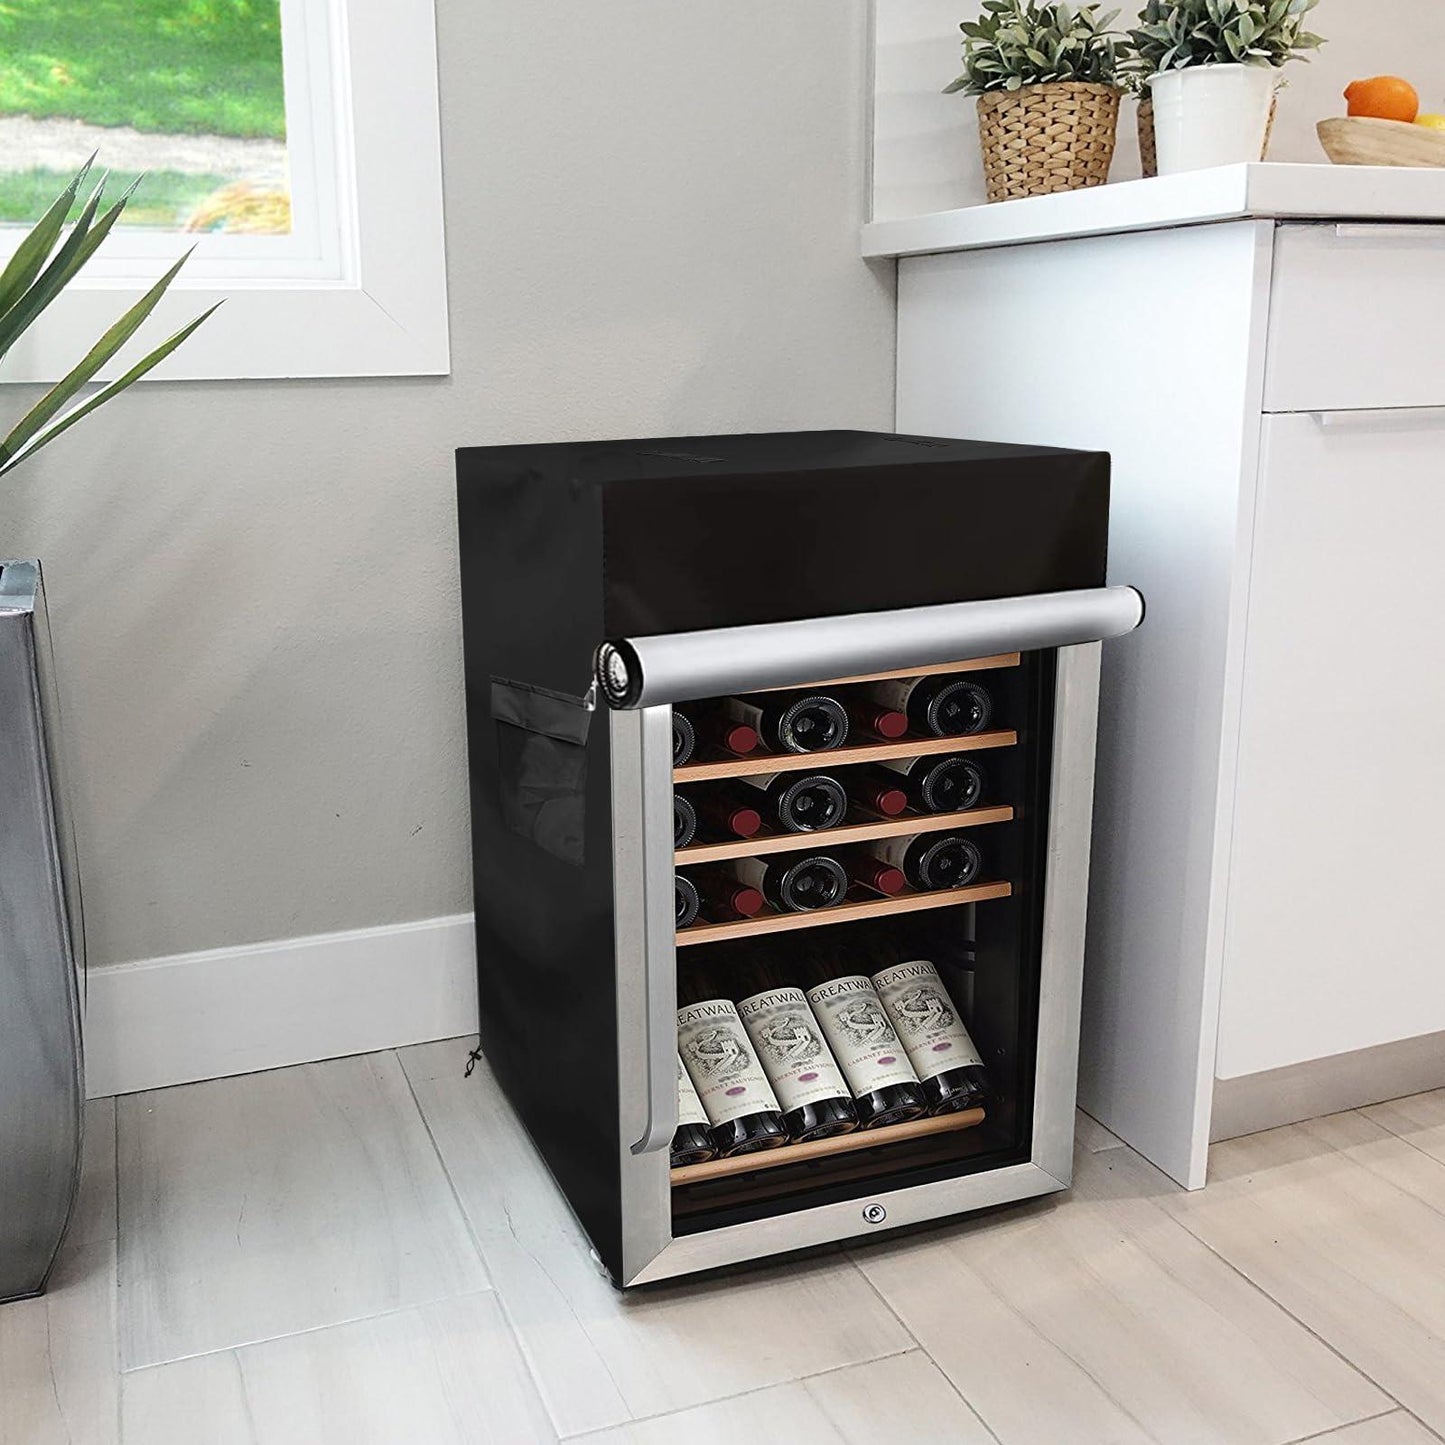 Bitubi Wine Cooler Refrigerator Cover,Outdoor Fridge Cover – Waterproof, Dustproof, Sun-Proof, 20" W x 20" D x 33" H. Suitable for most 32-36 Bottle Beer or Wine Mini Fridge (Black) - CookCave